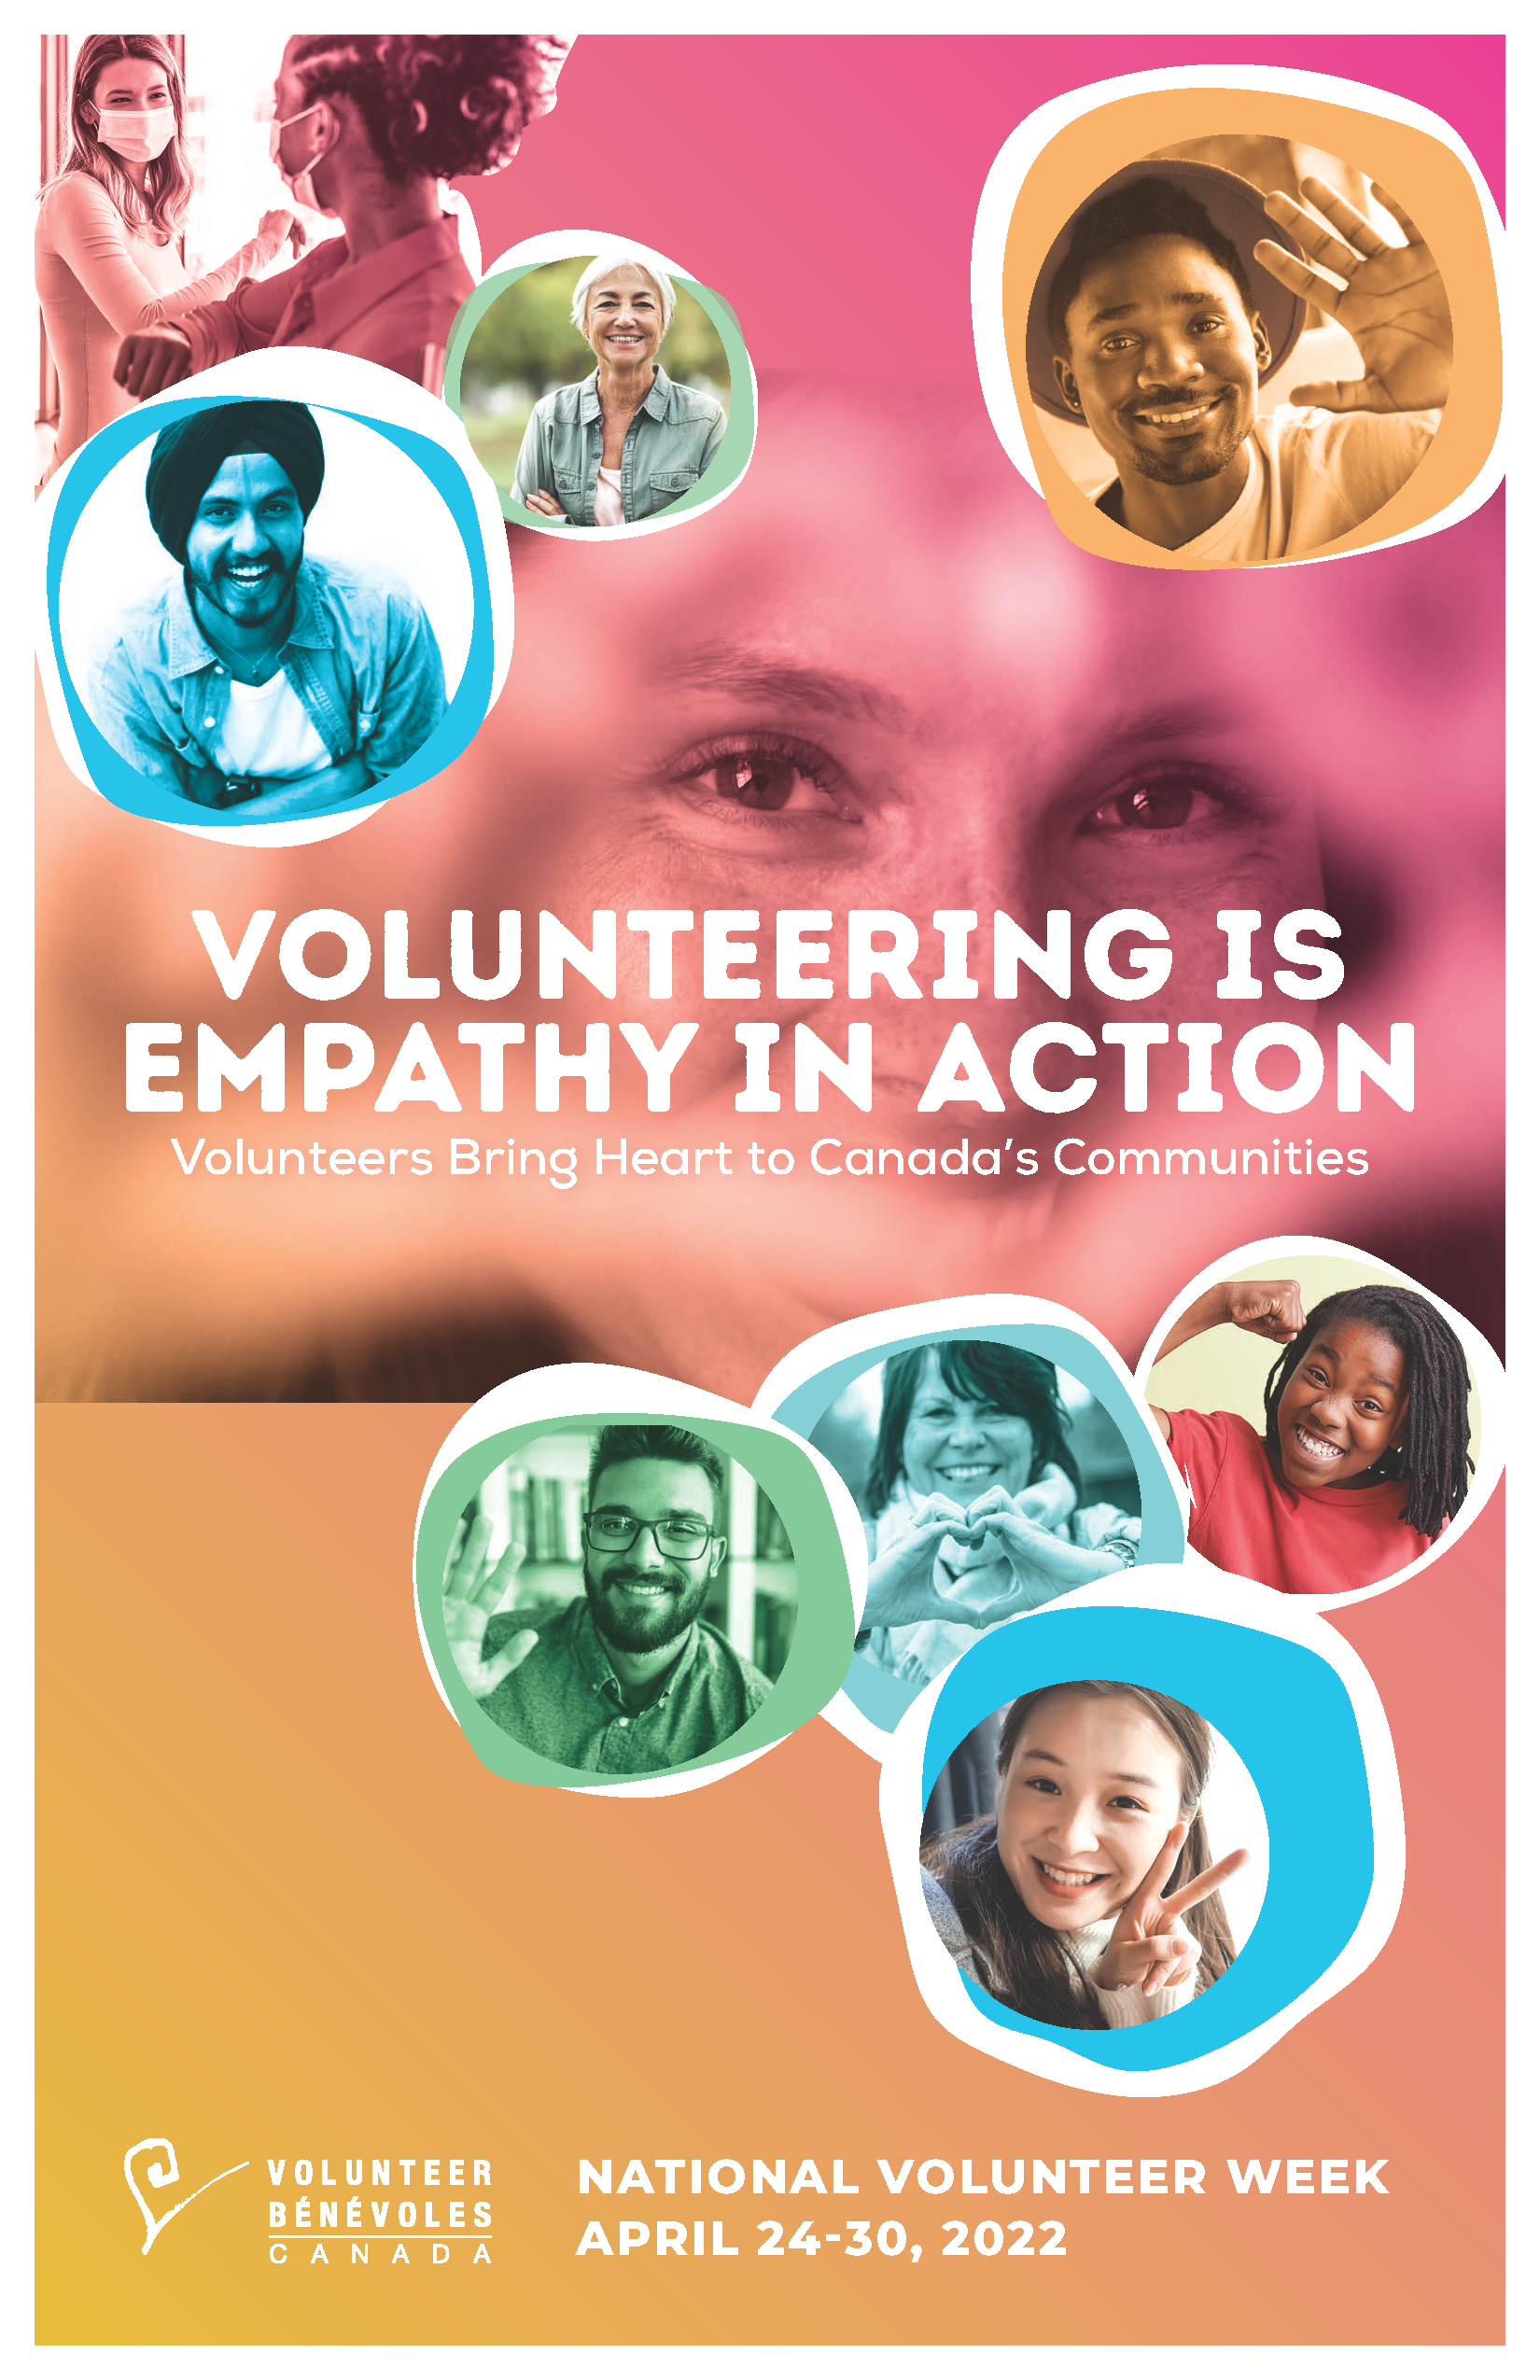 National Volunteer Week Poster Volunteering is Empathy in Action: images of individuals smiling